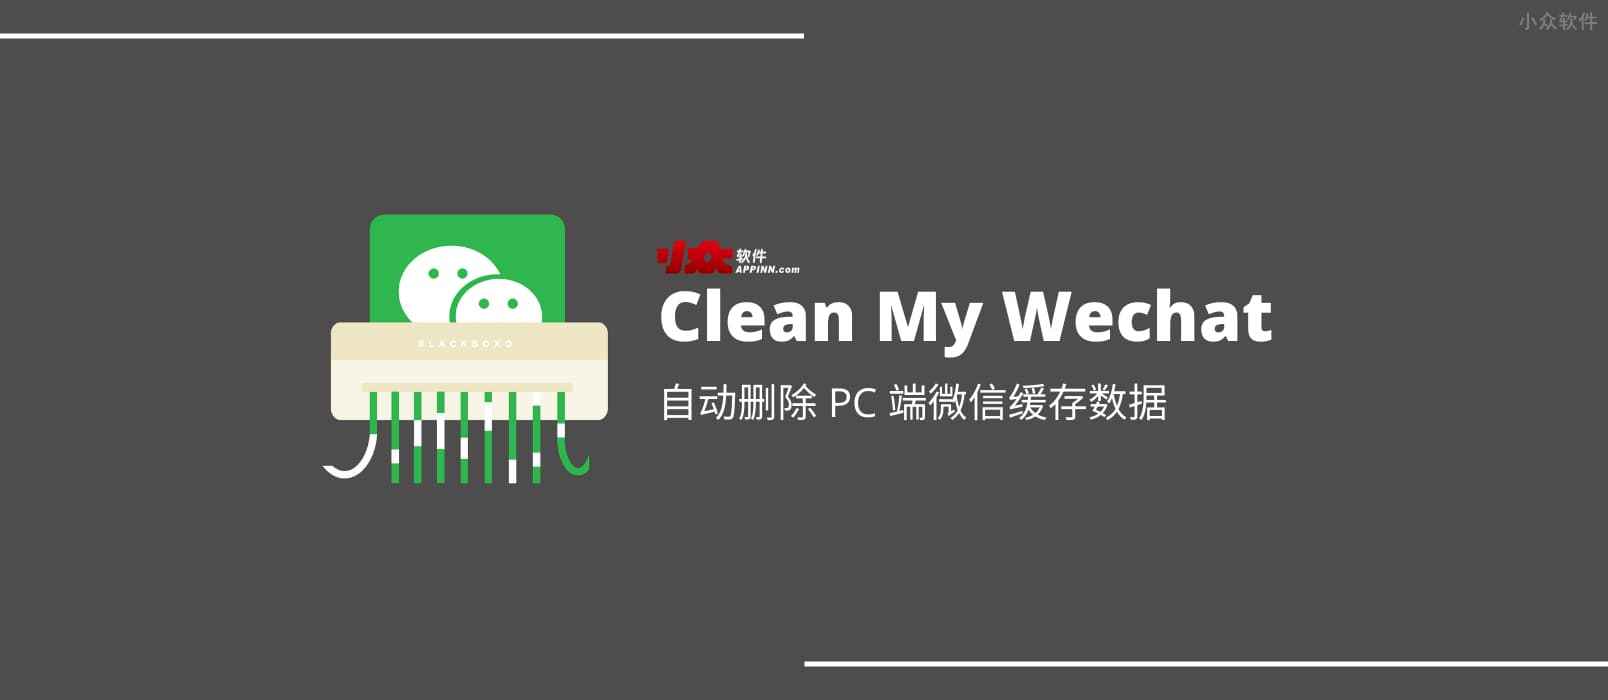 CleanMyWechat - 可根据时间，自动删除 PC 端微信缓存数据，并保留文字聊天记录